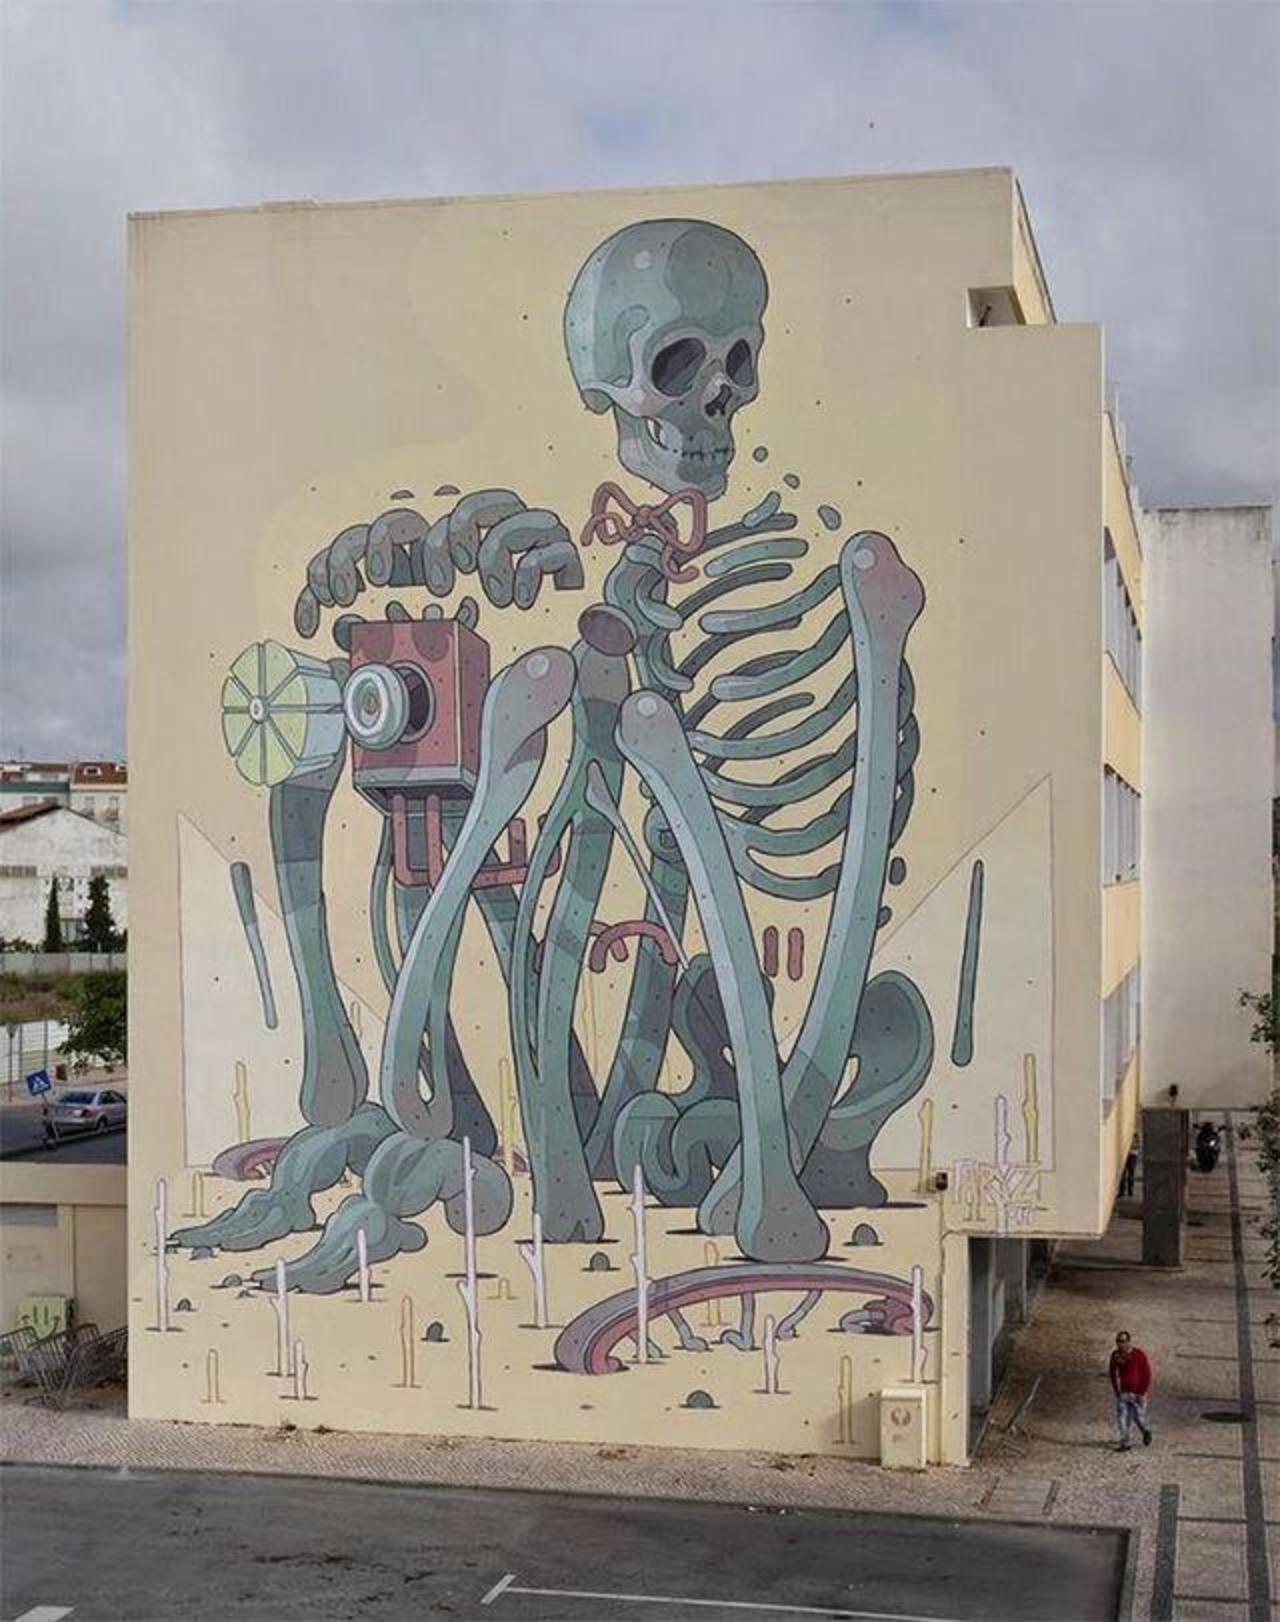 RT @oldskull: Nuevo mural de Aryz en Lagos, Portugal #Streetart #graffiti http://t.co/wLTKUxHSvU